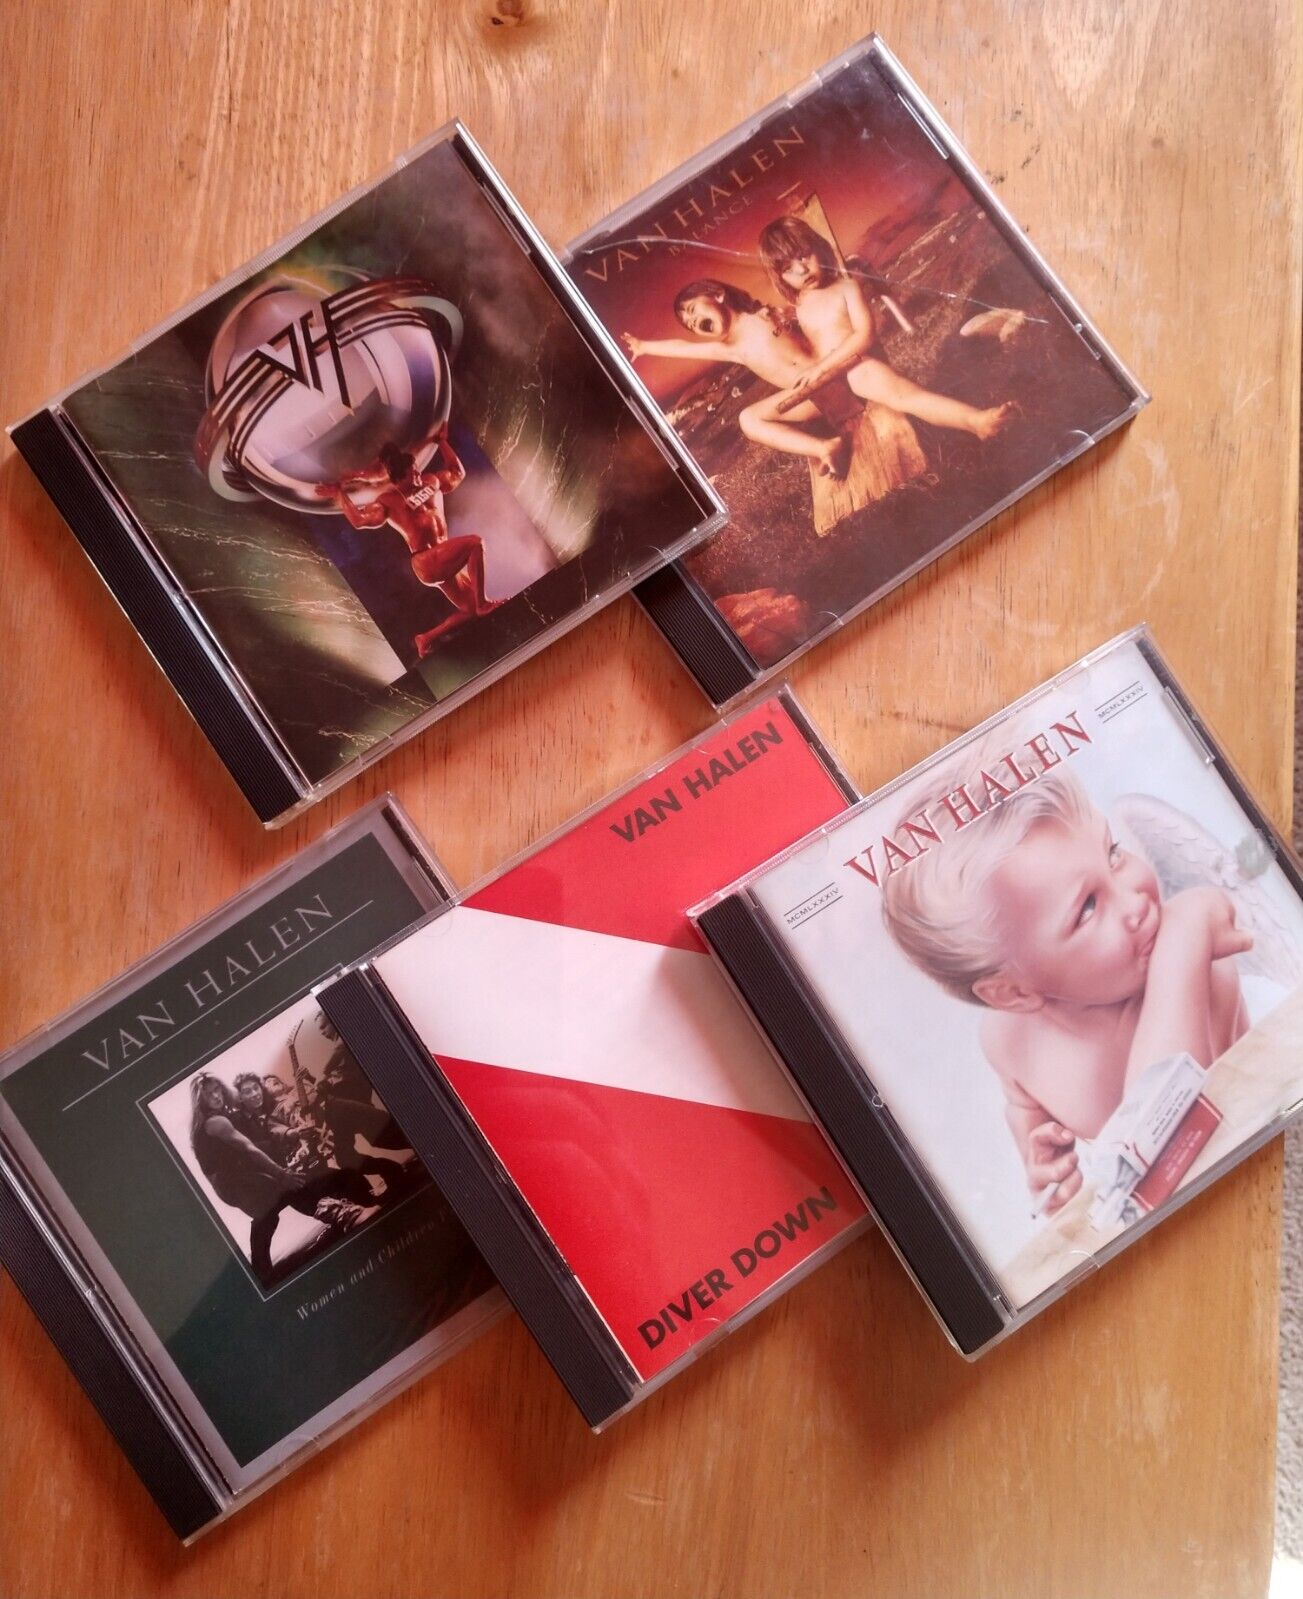 Vintage Van Halen CD Lot - 5 Albums